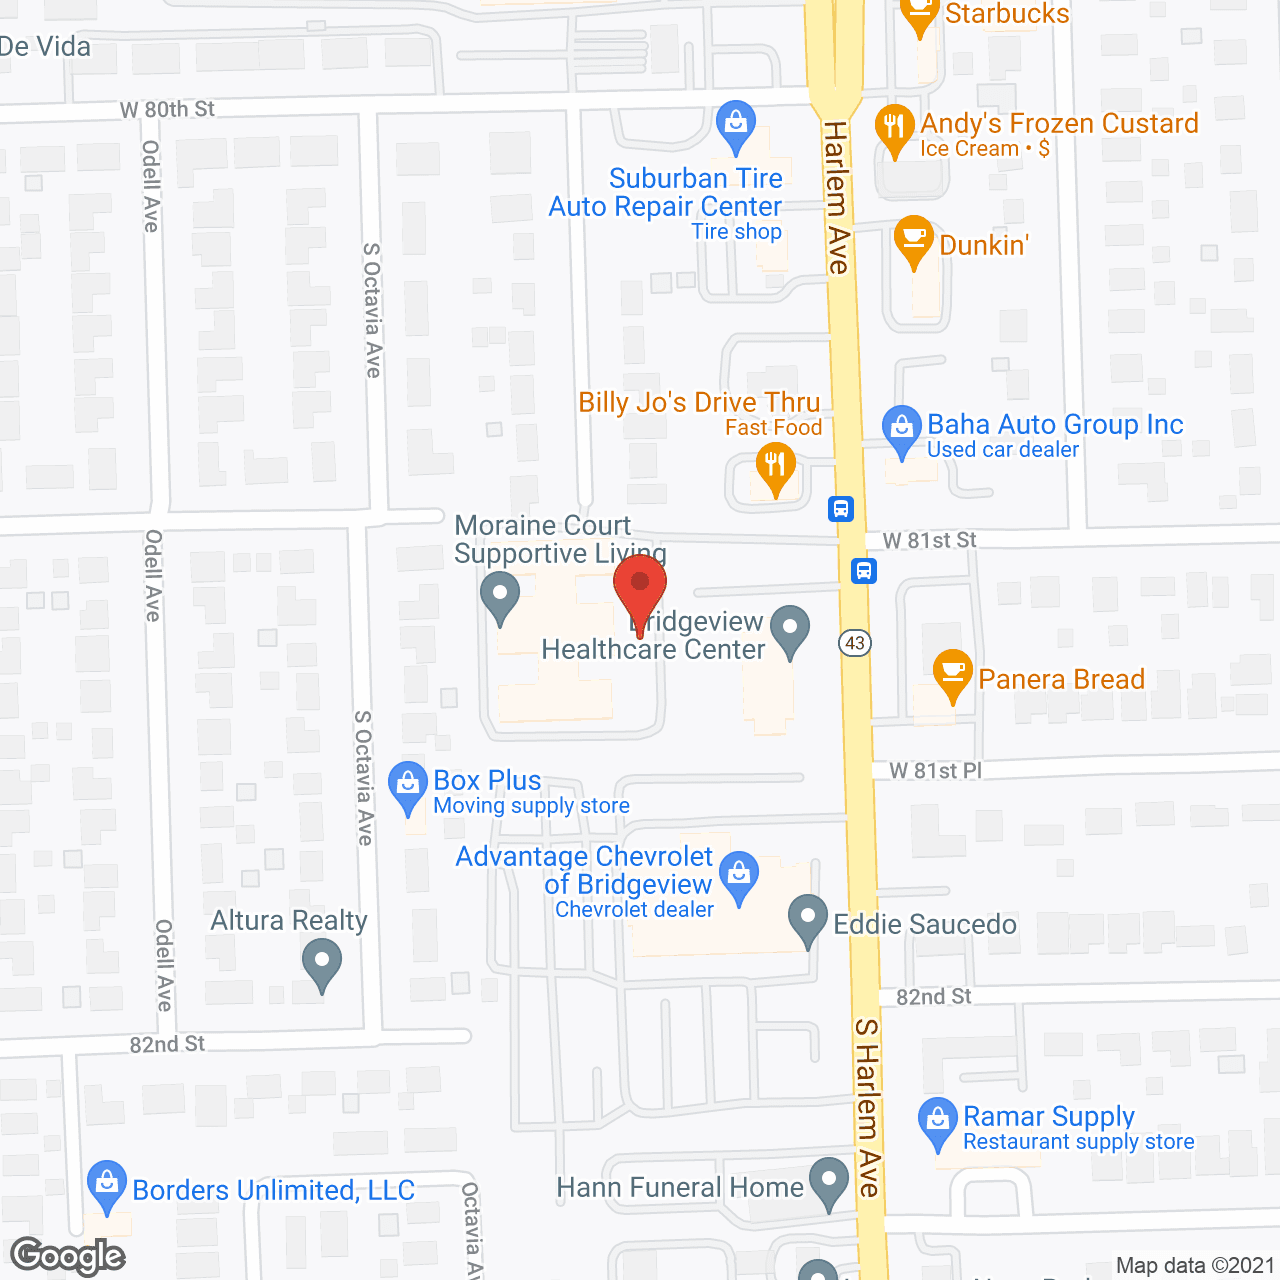 Moraine Court in google map